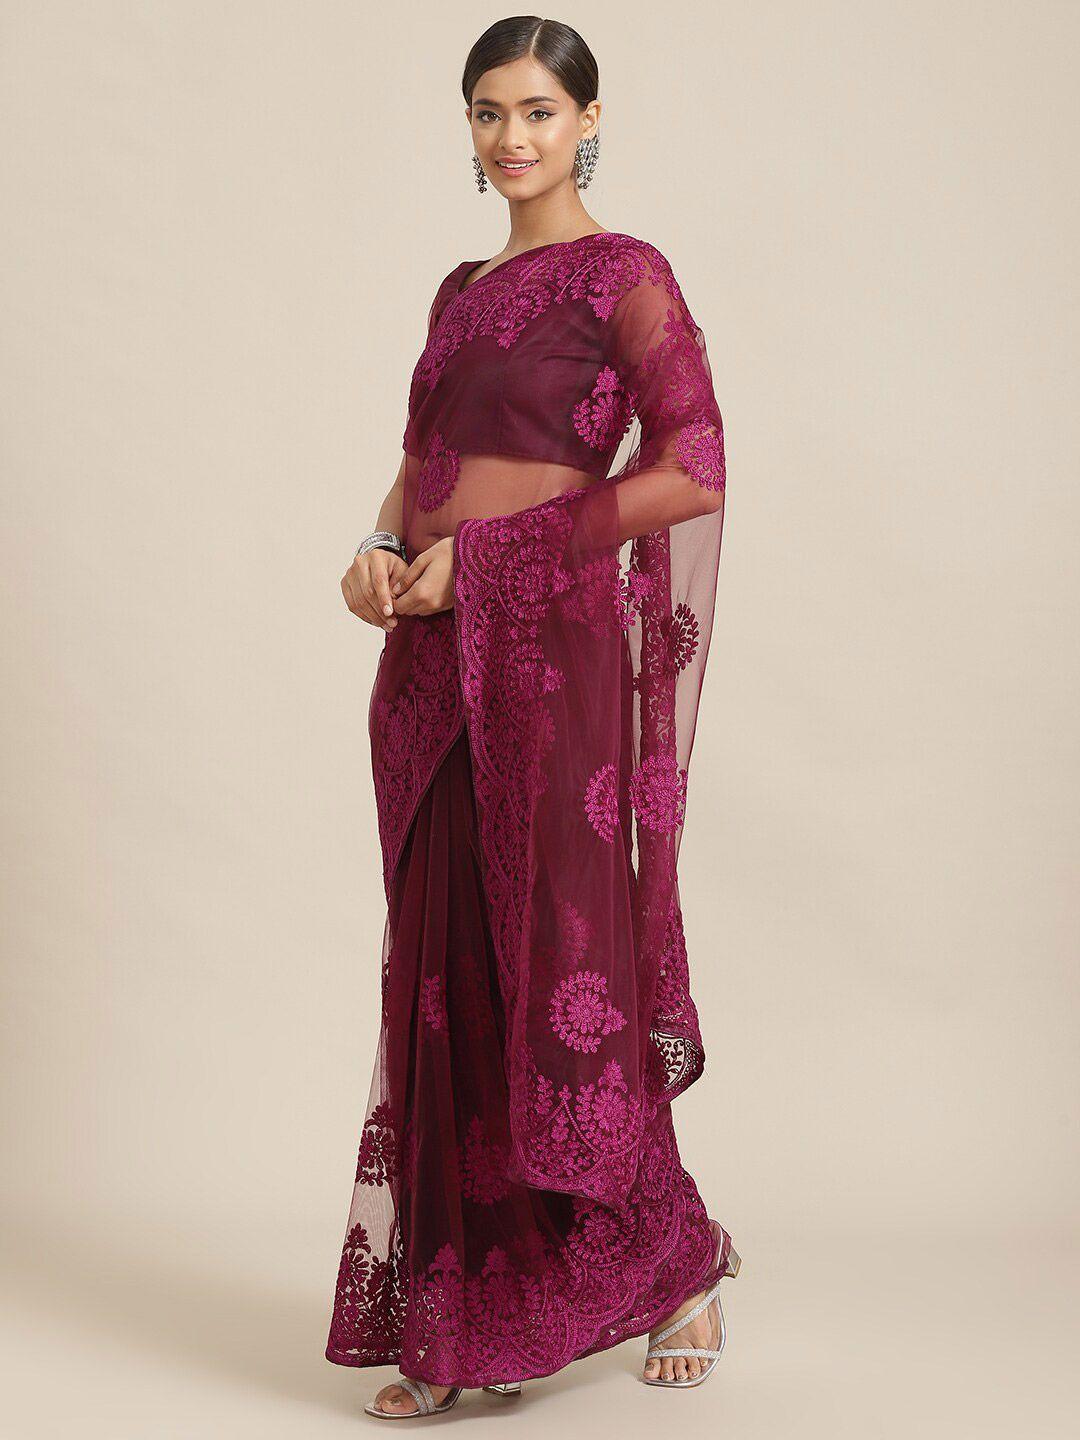 kalista purple ethnic motifs embroidered net saree